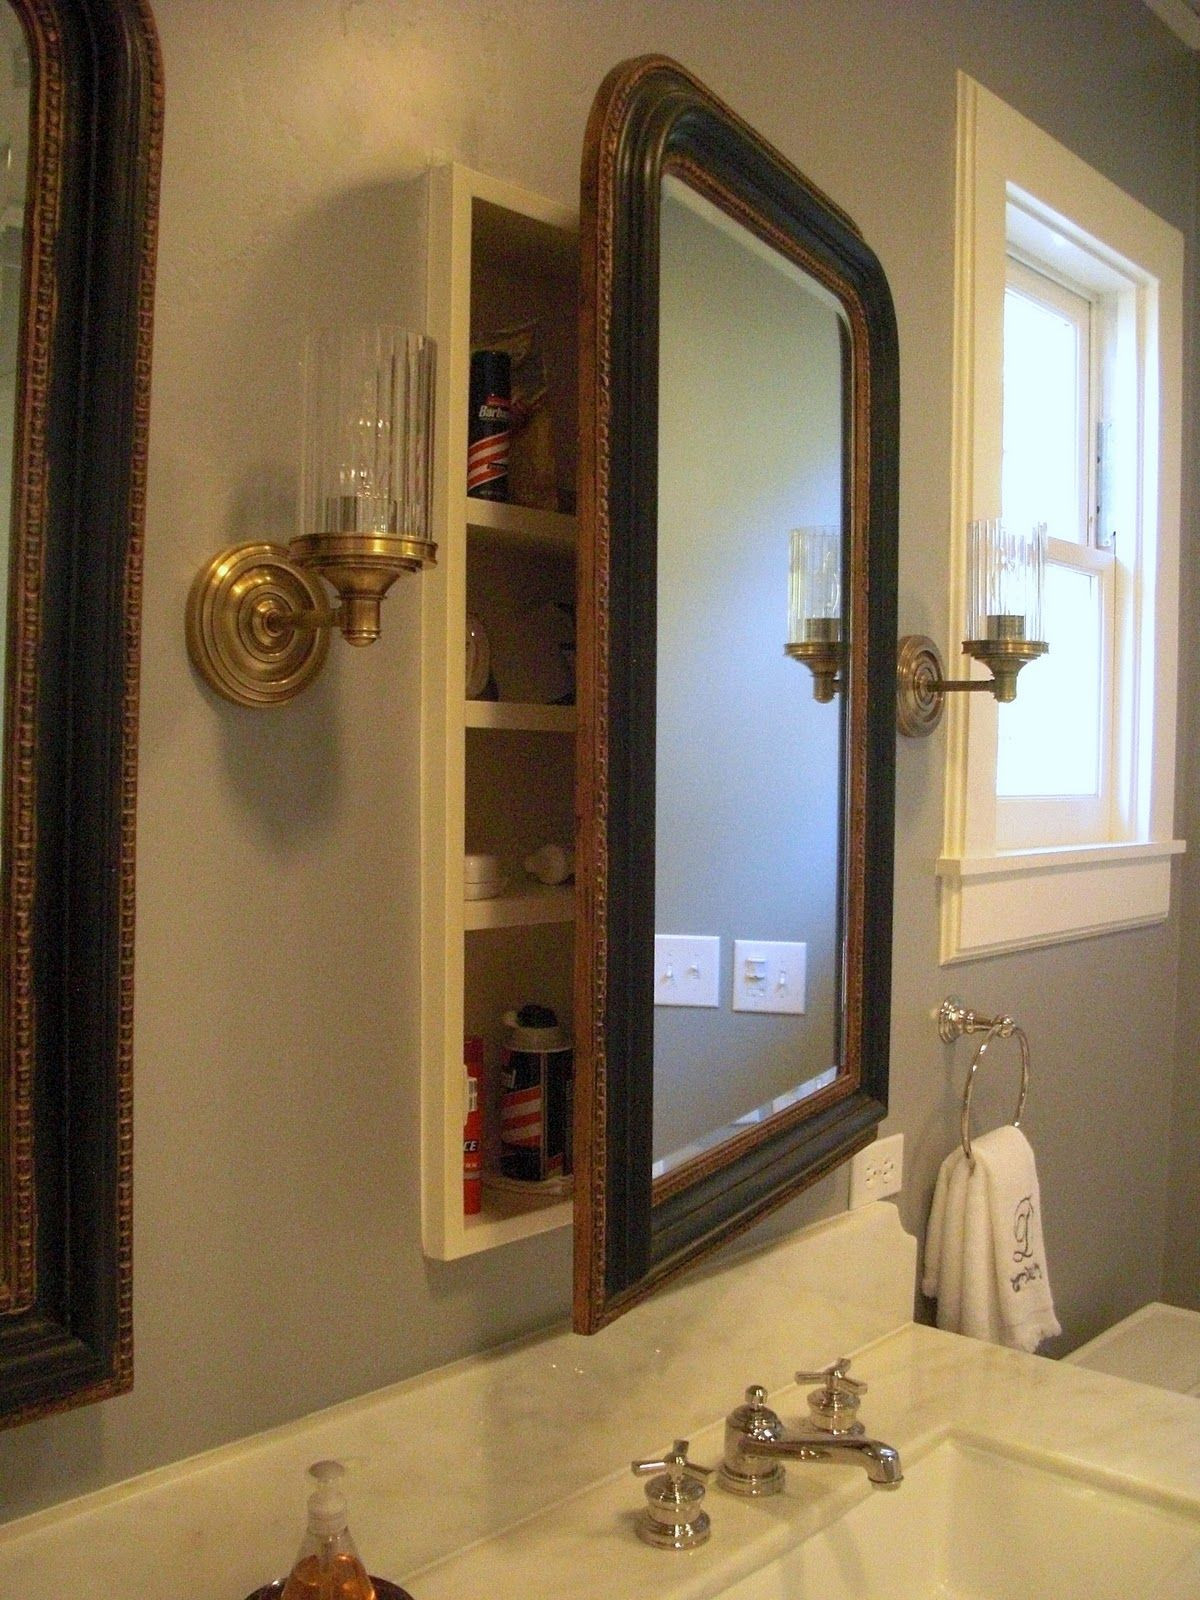 Restoration Hardware Bathroom Mirrors
 Restoration Hardware mirrors over medicine cabinets